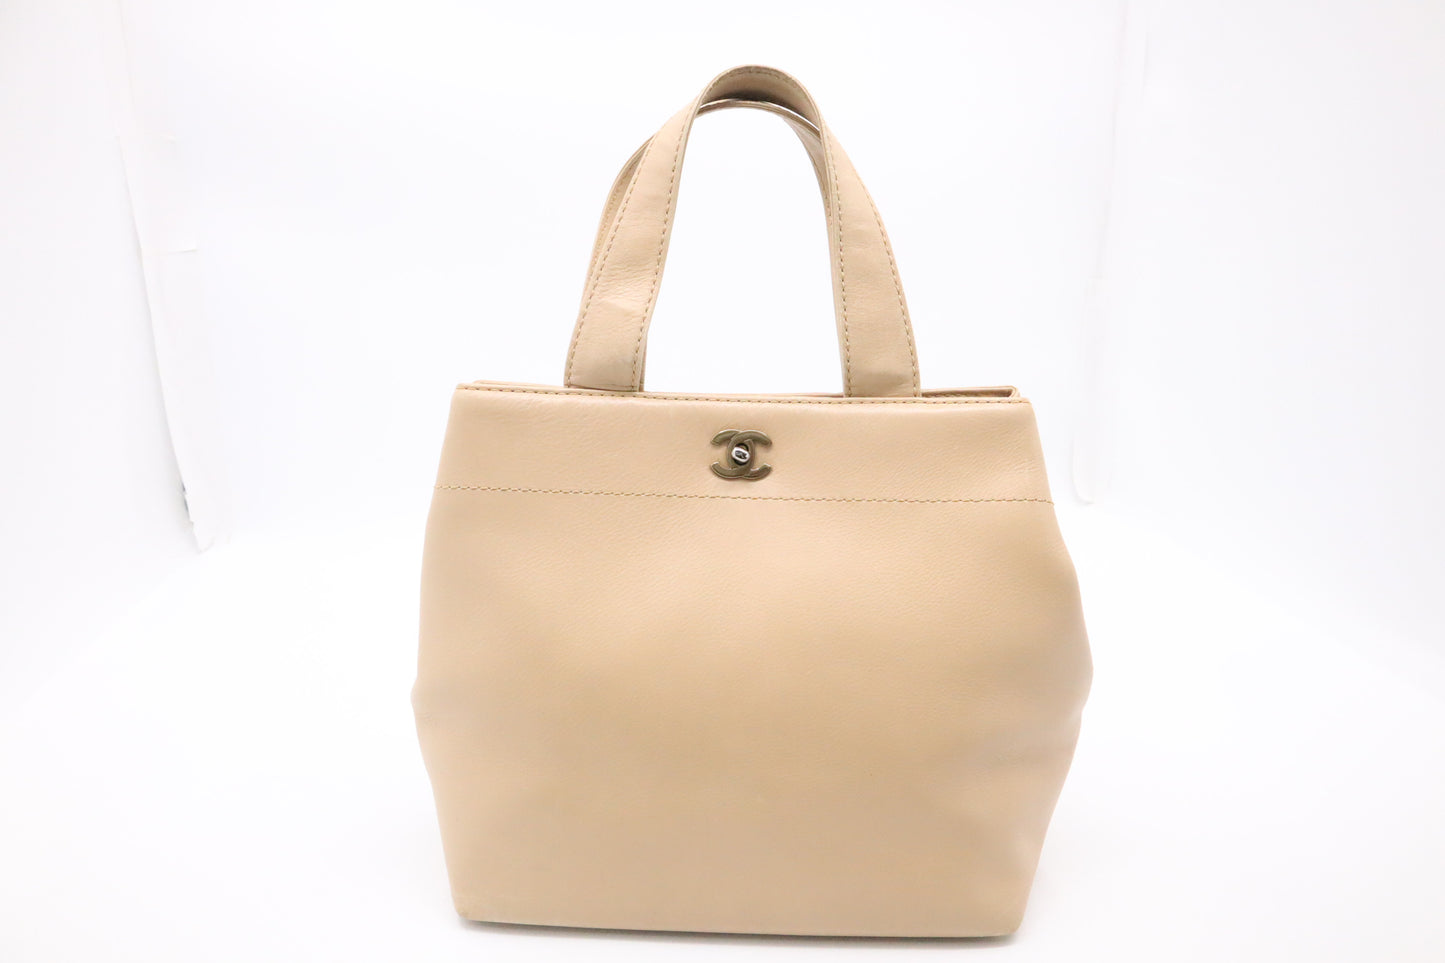 Chanel Handbag in Beige Leather